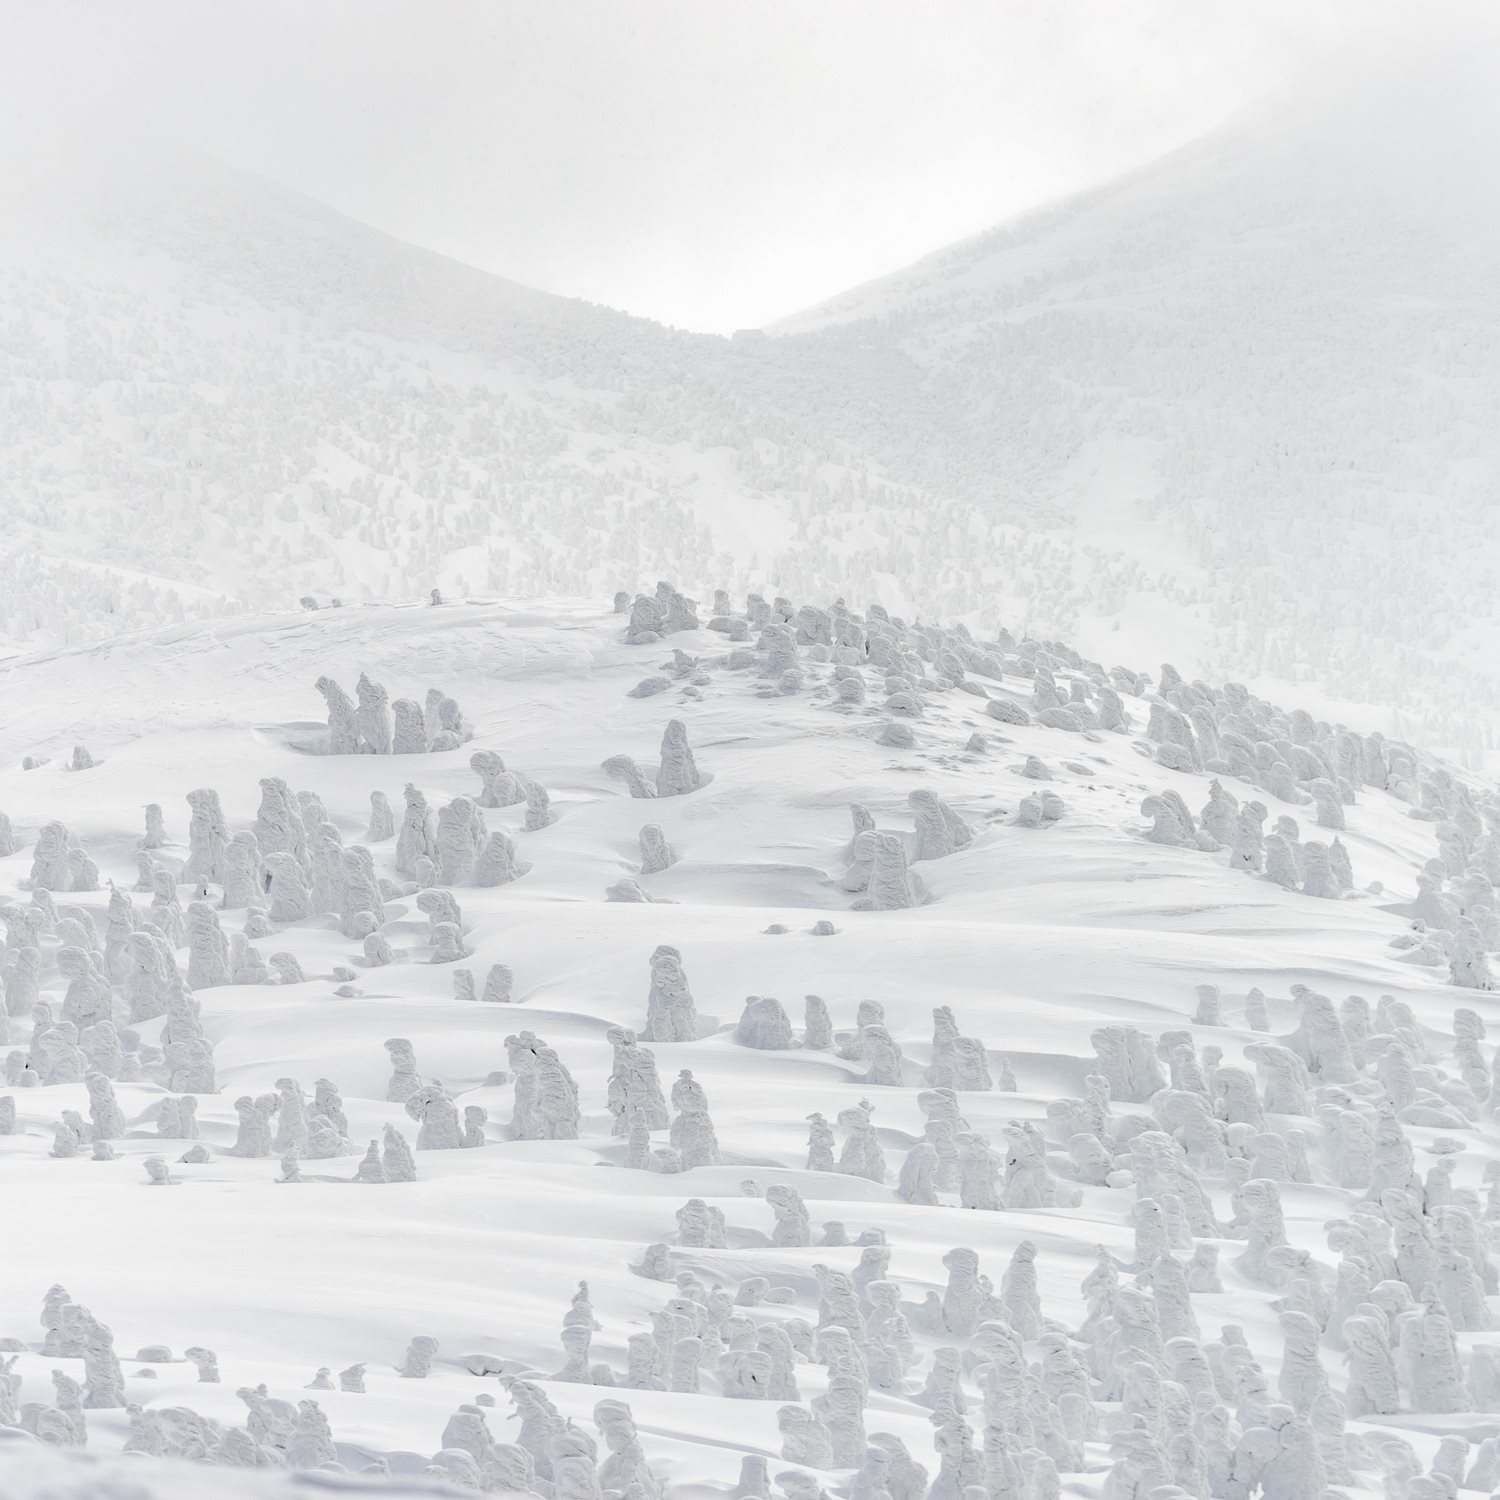 Hakkoda mountain in heavy snowfall, Aomori Prefecture, Japan = Shutterstock 7